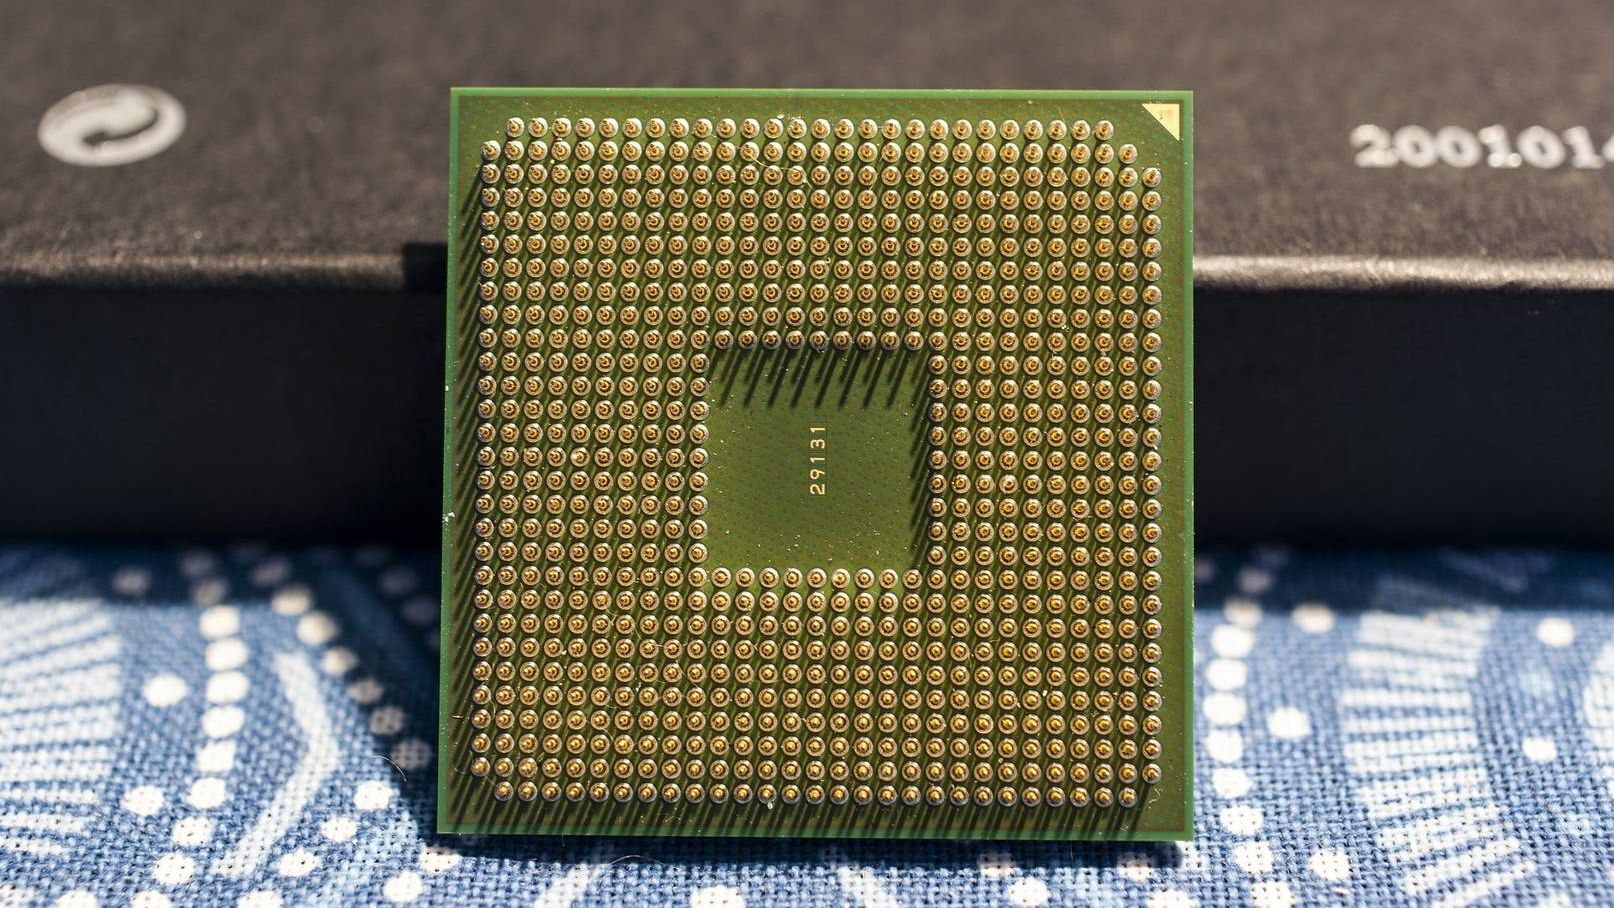 процессор AMD